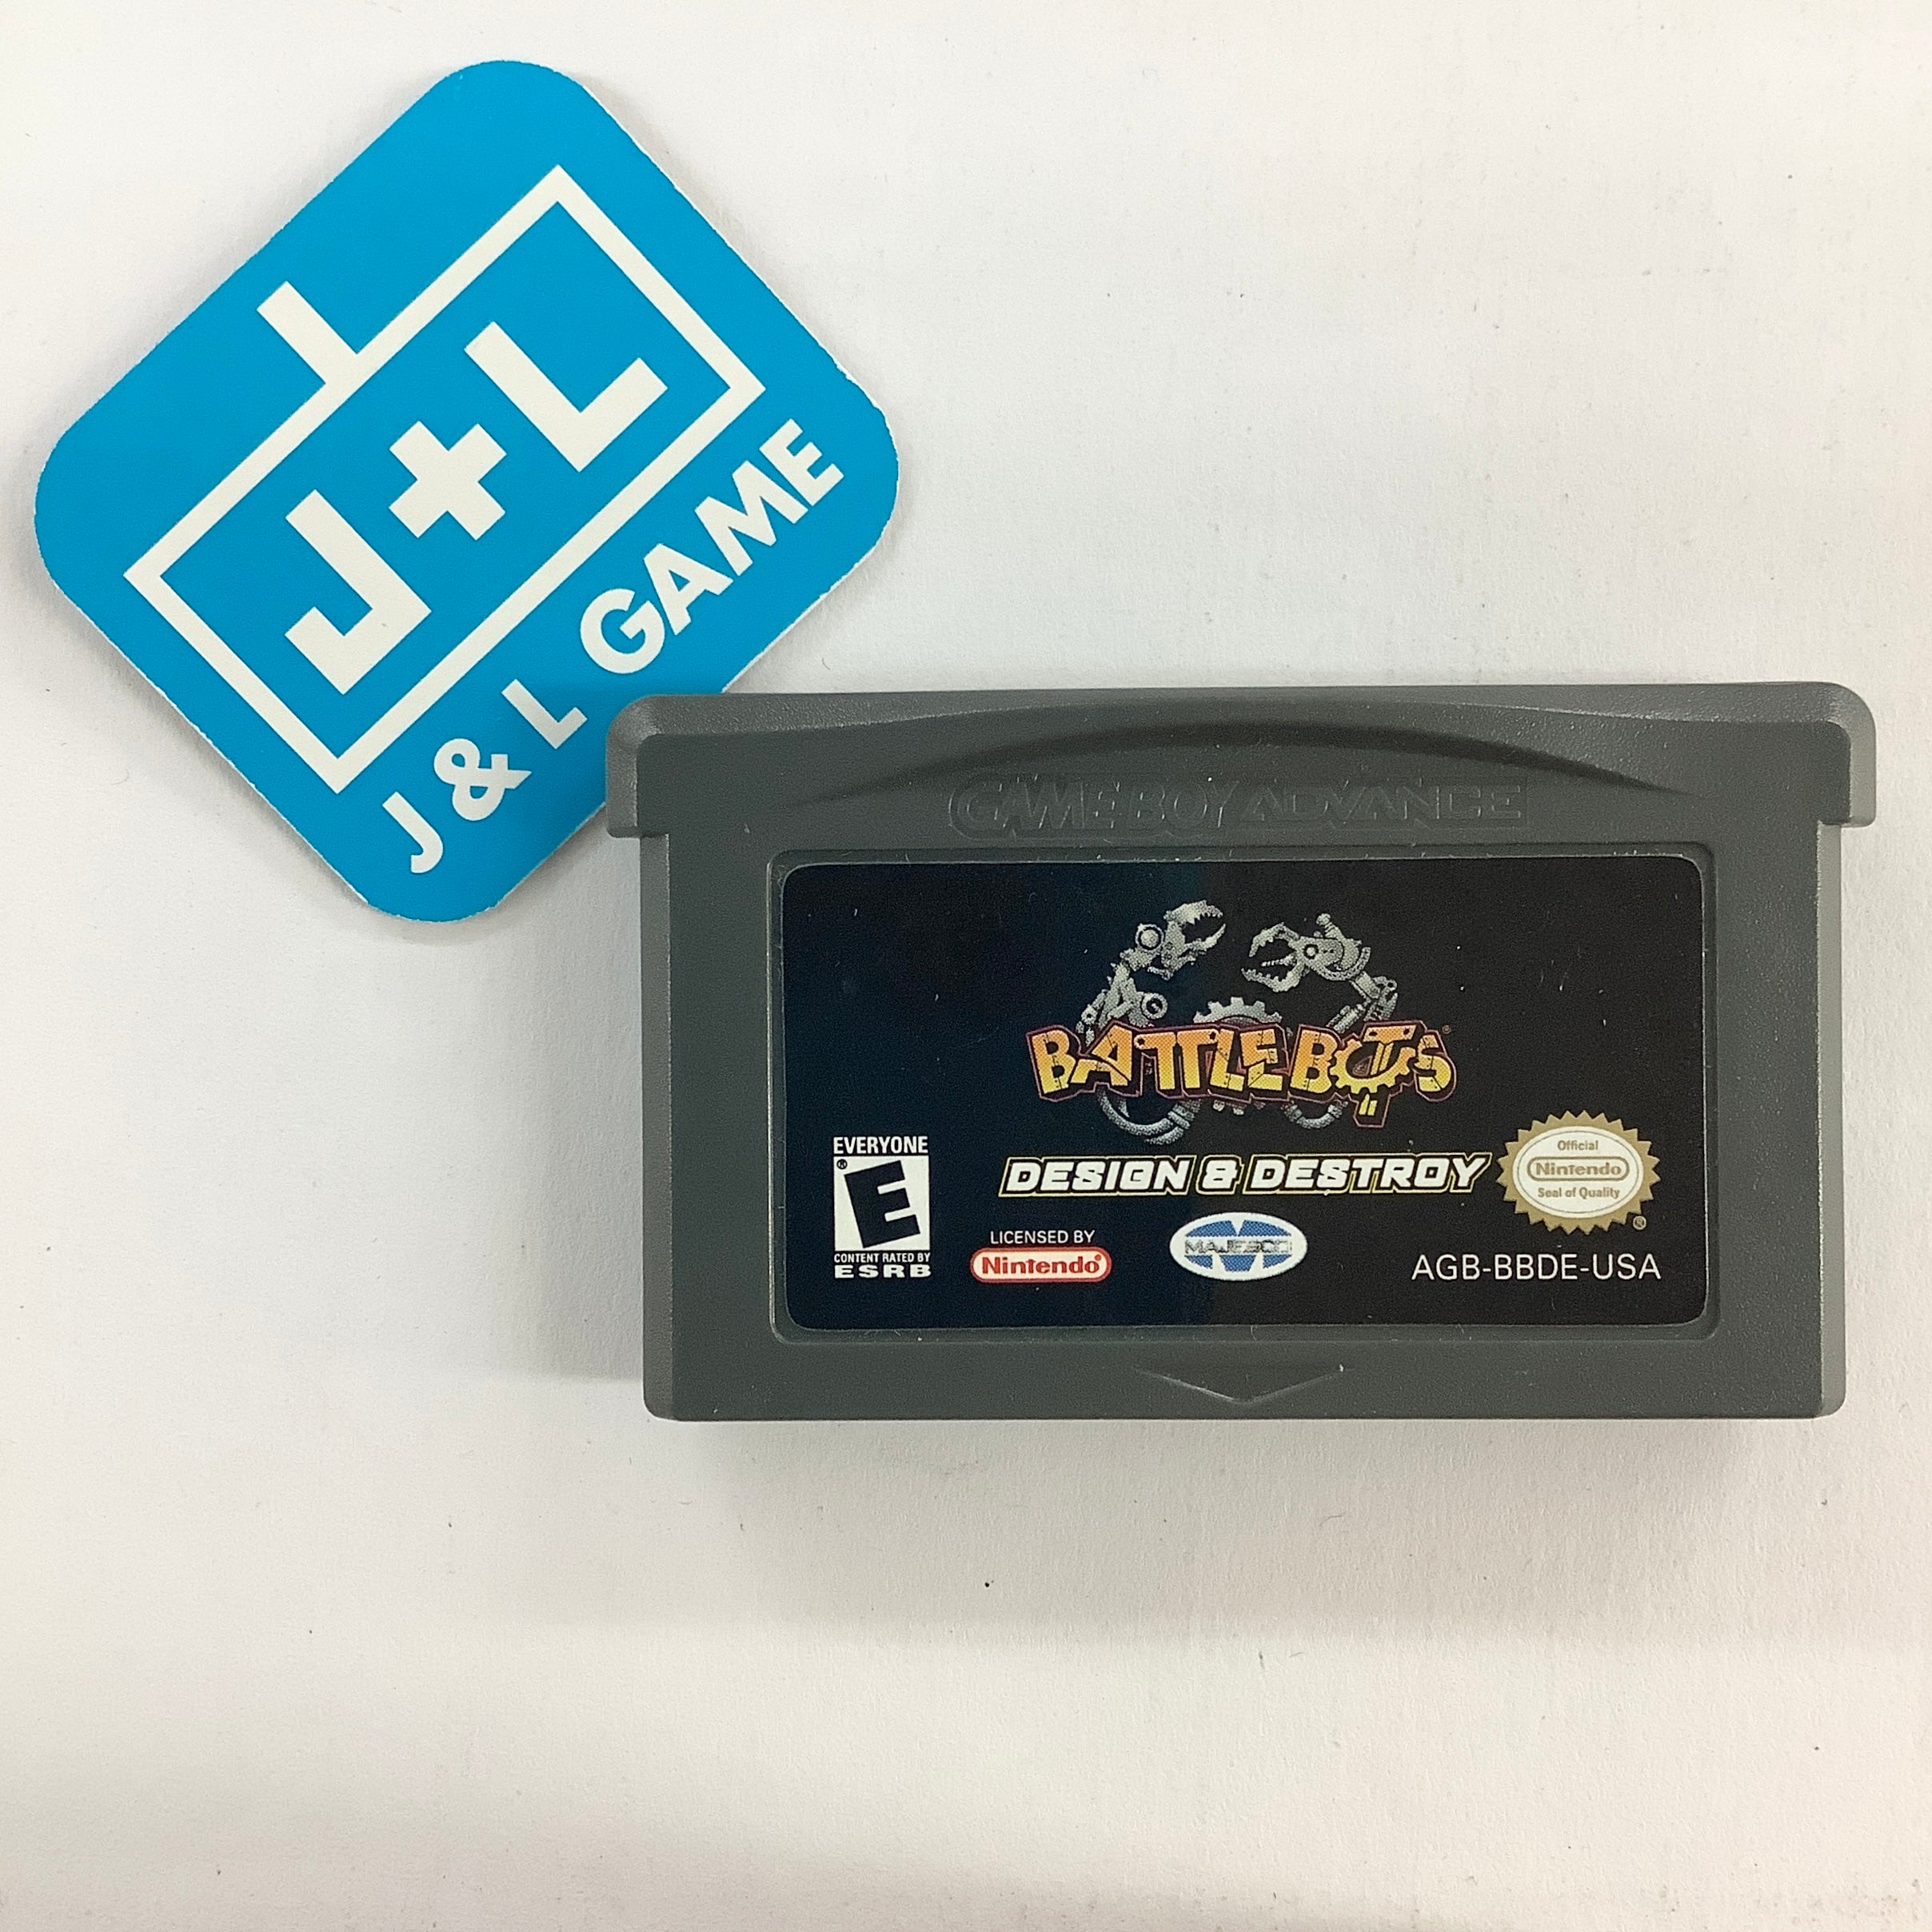 Battlebots: Design & Destroy - (GBA) Game Boy Advance [Pre-Owned] Video Games Majesco   